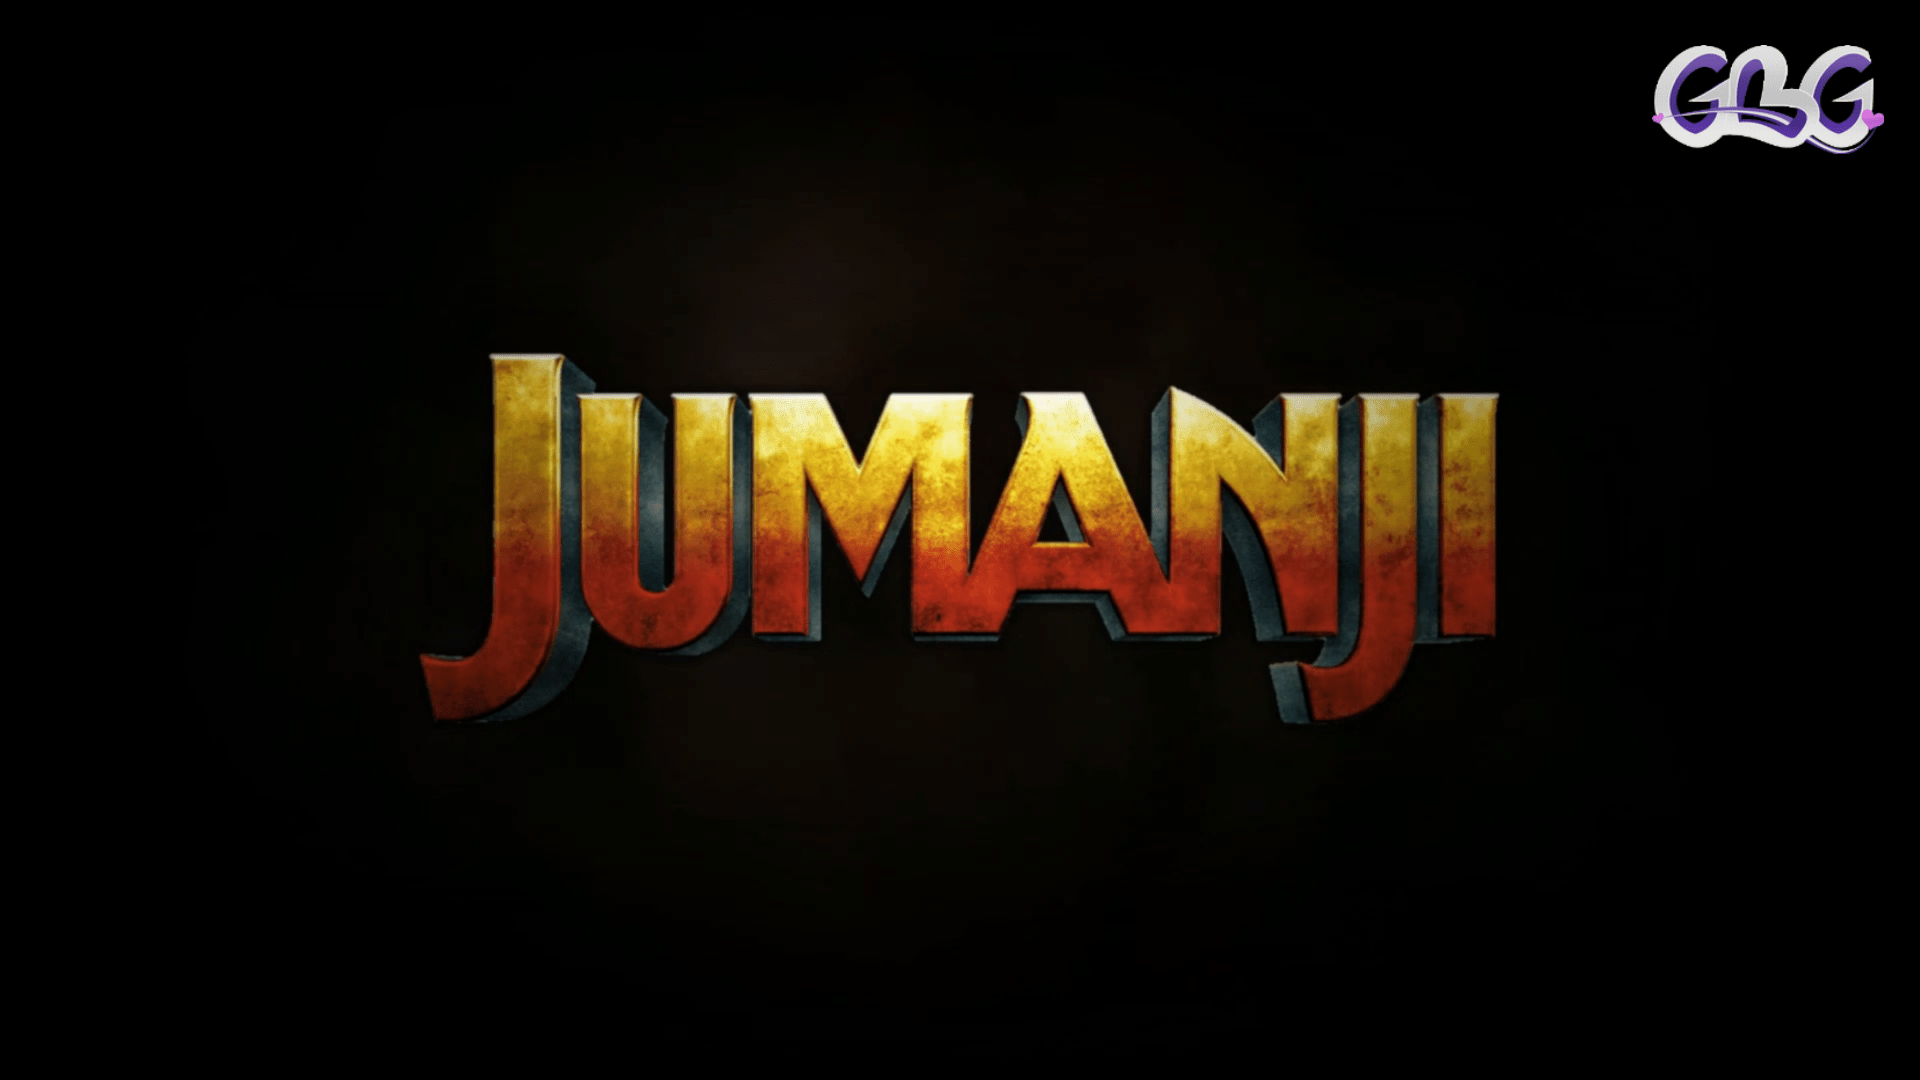 "Jumanji" et son logo emblématique